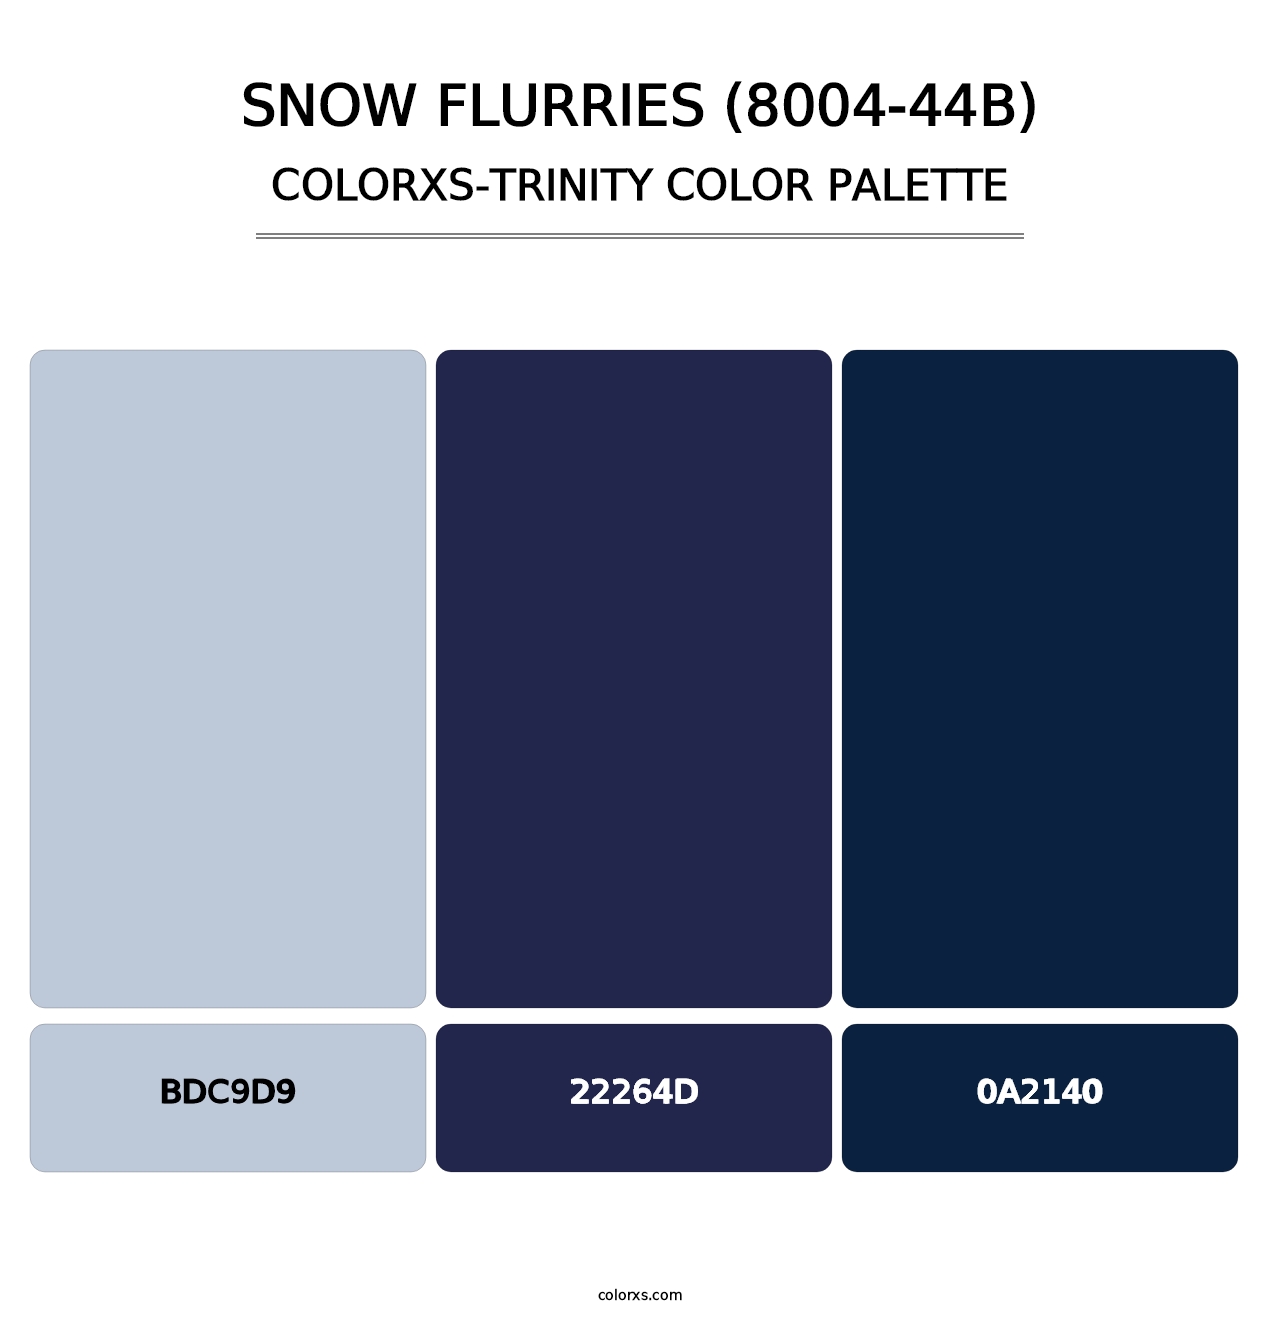 Snow Flurries (8004-44B) - Colorxs Trinity Palette